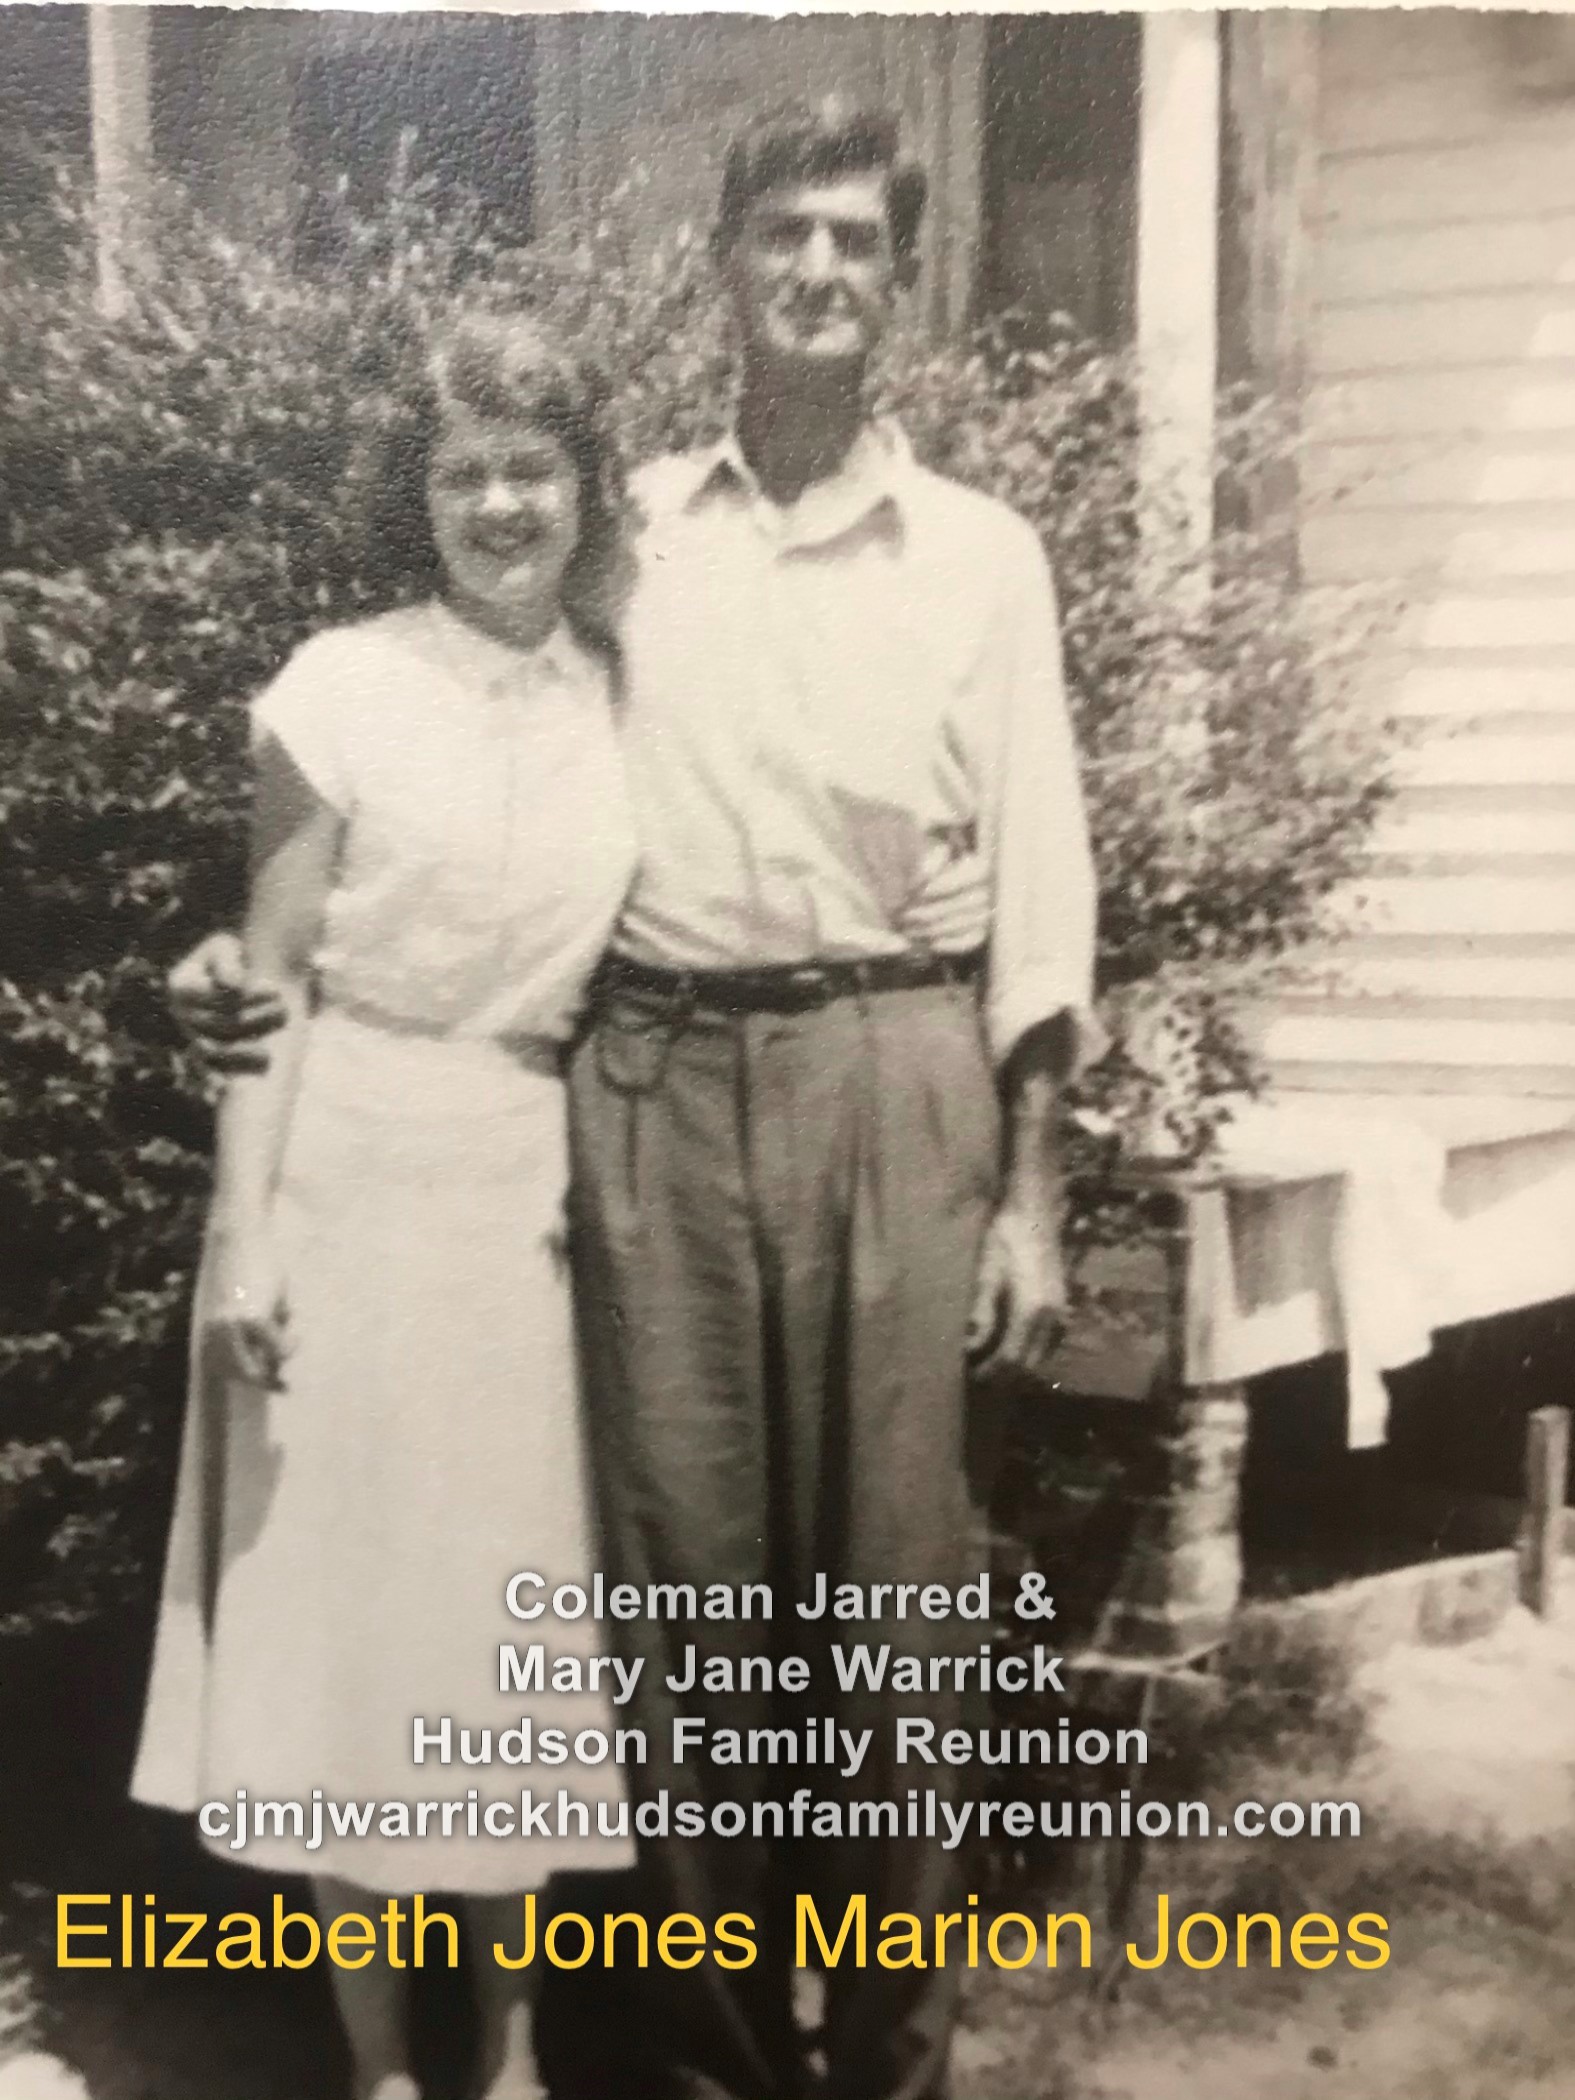 Elizabeth Jones Sandy and her father, Marion Thomas Jones